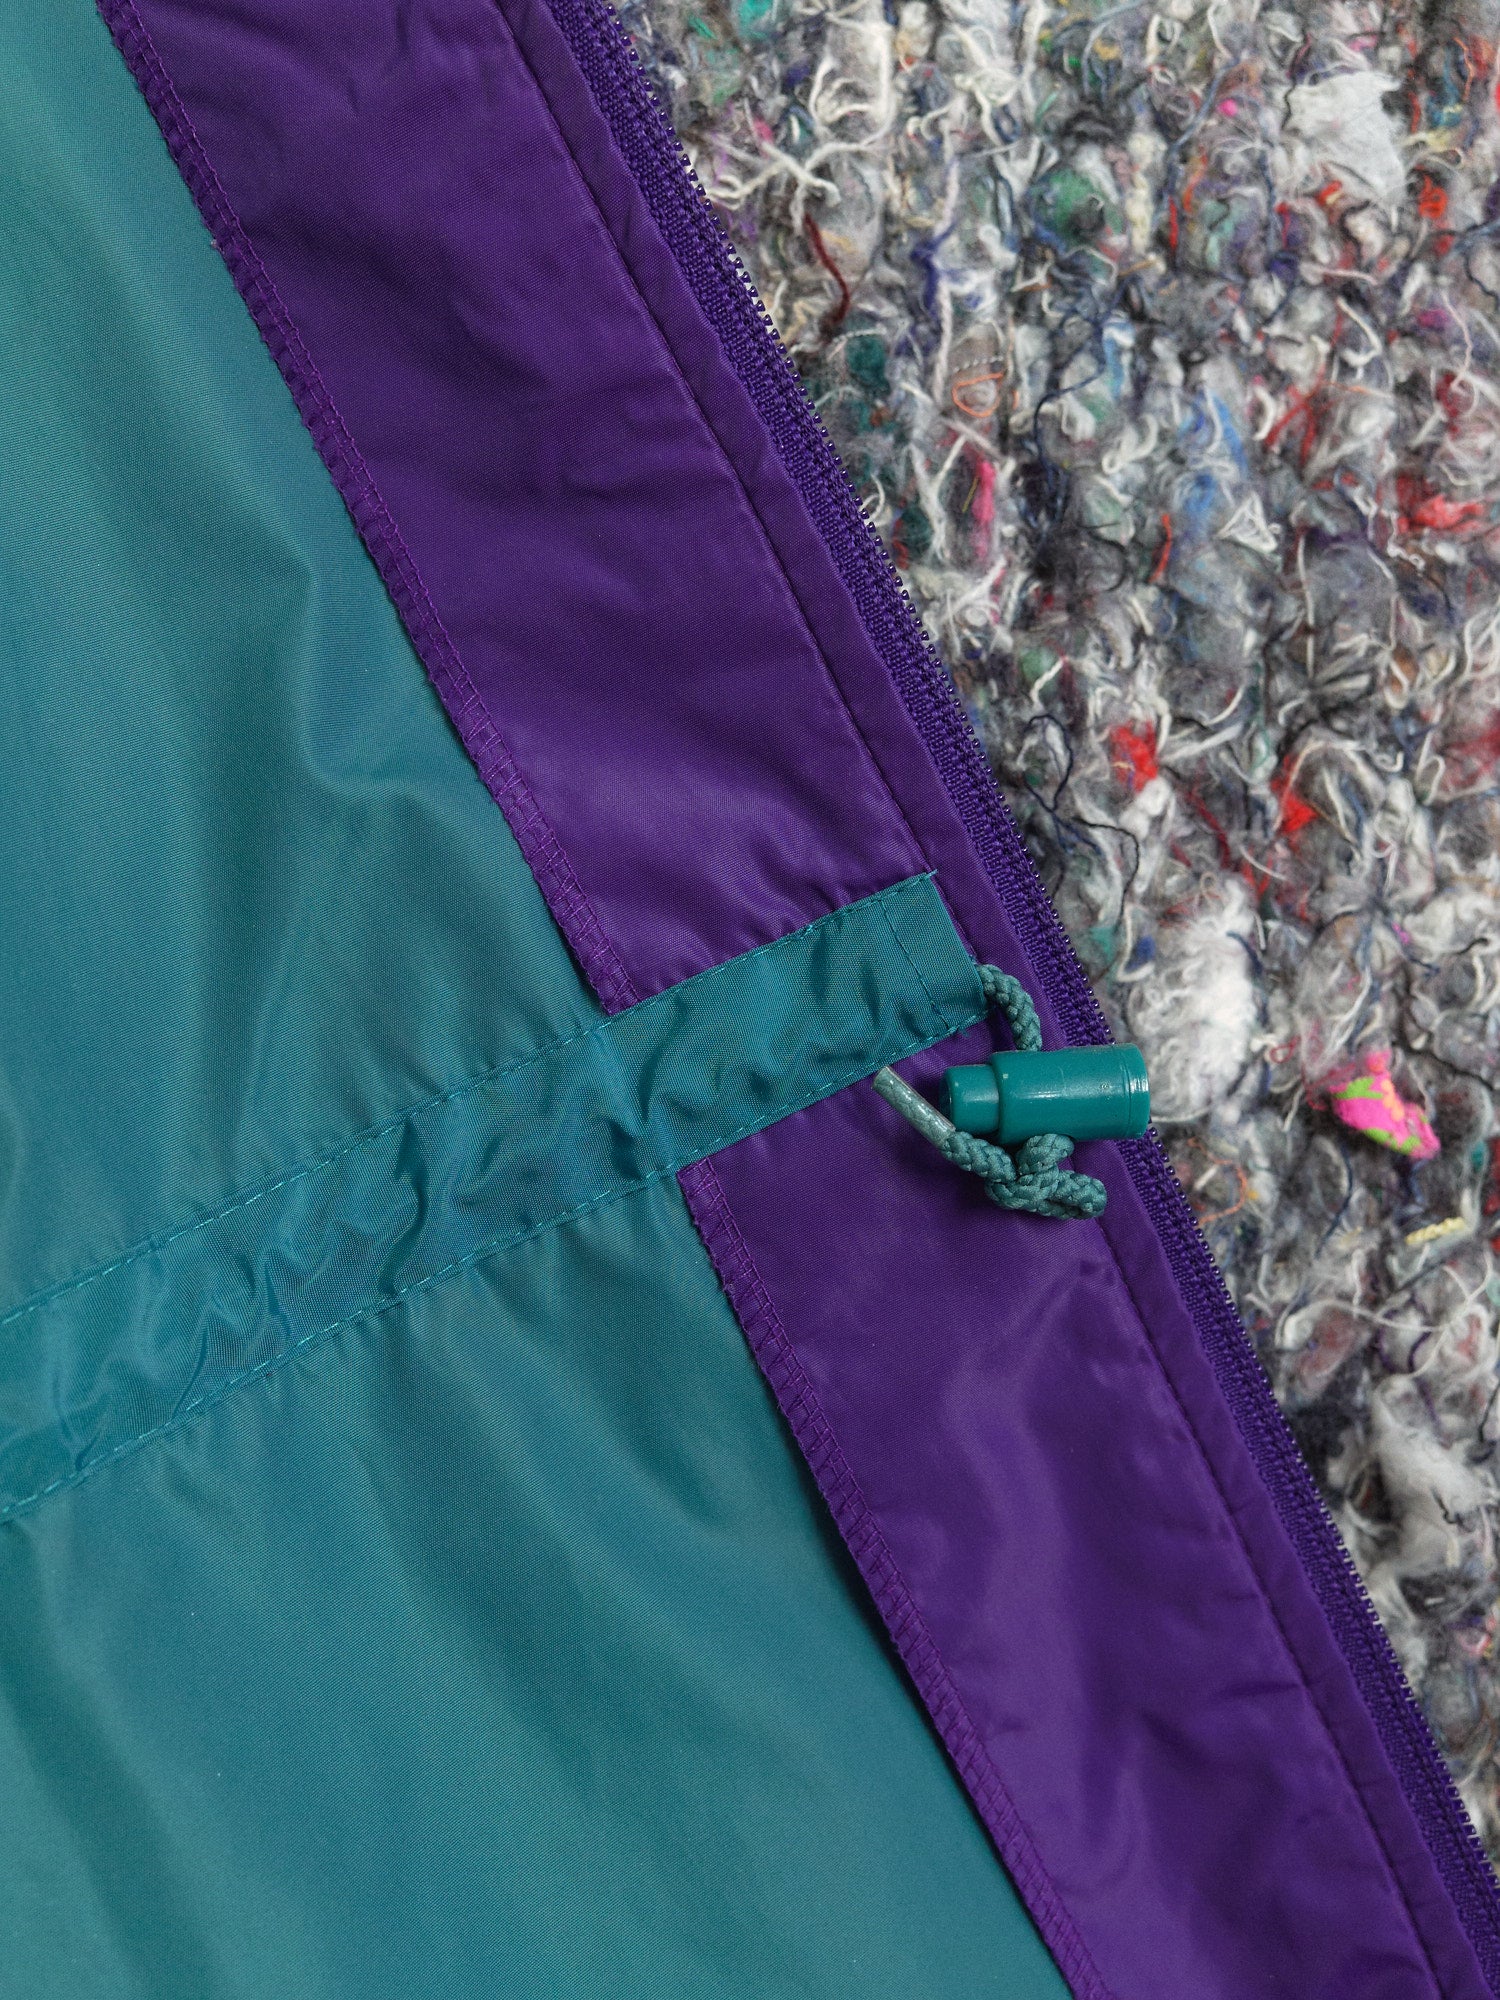 Woolrich Woman 1990s aqua green nylon extra long purple trim raincoat - size L